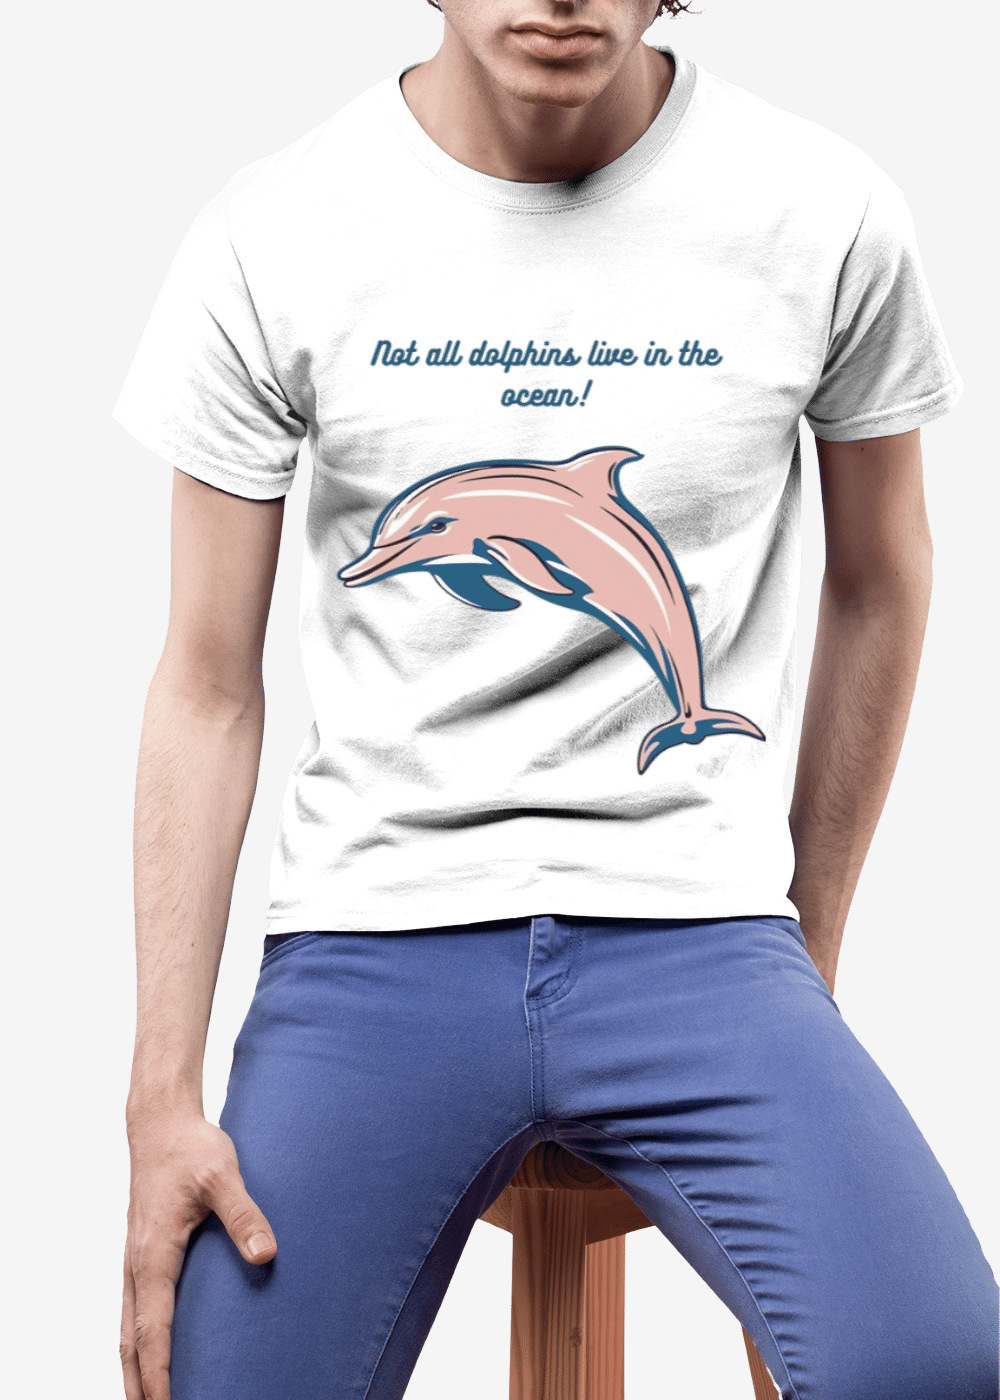 Dolphin Print T Shirt for Men - Amazon River